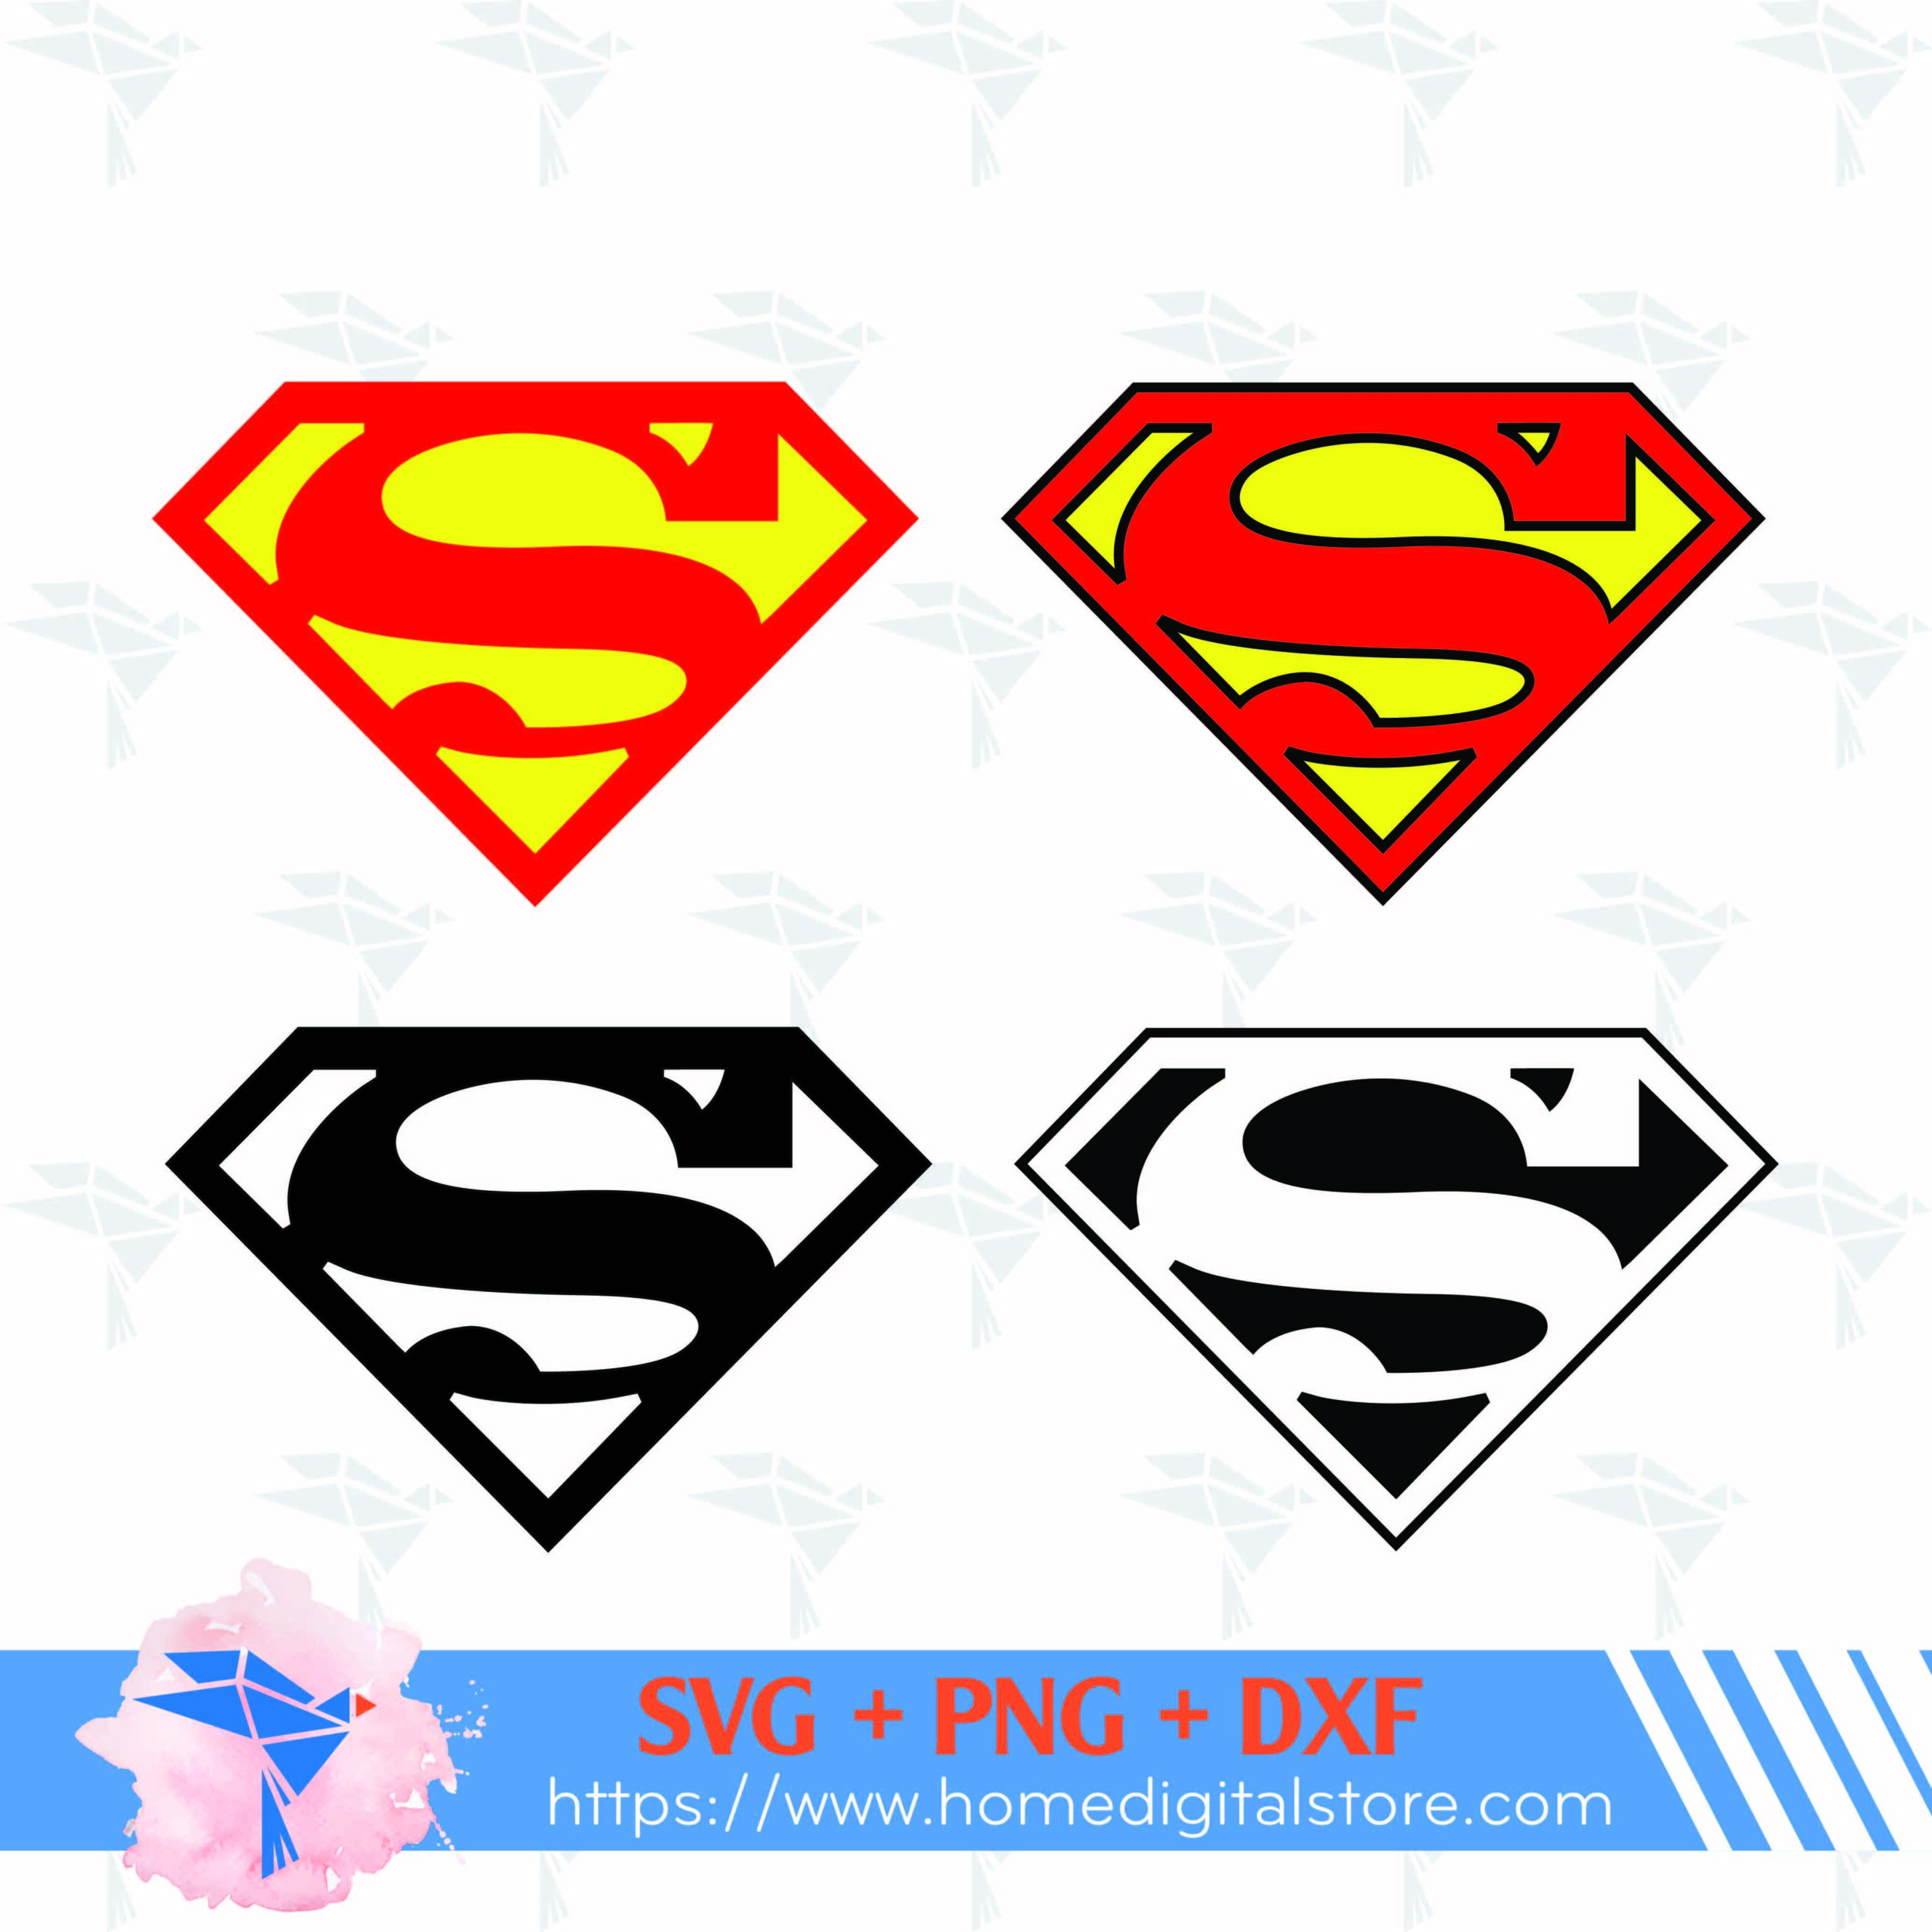 superman logo hd png